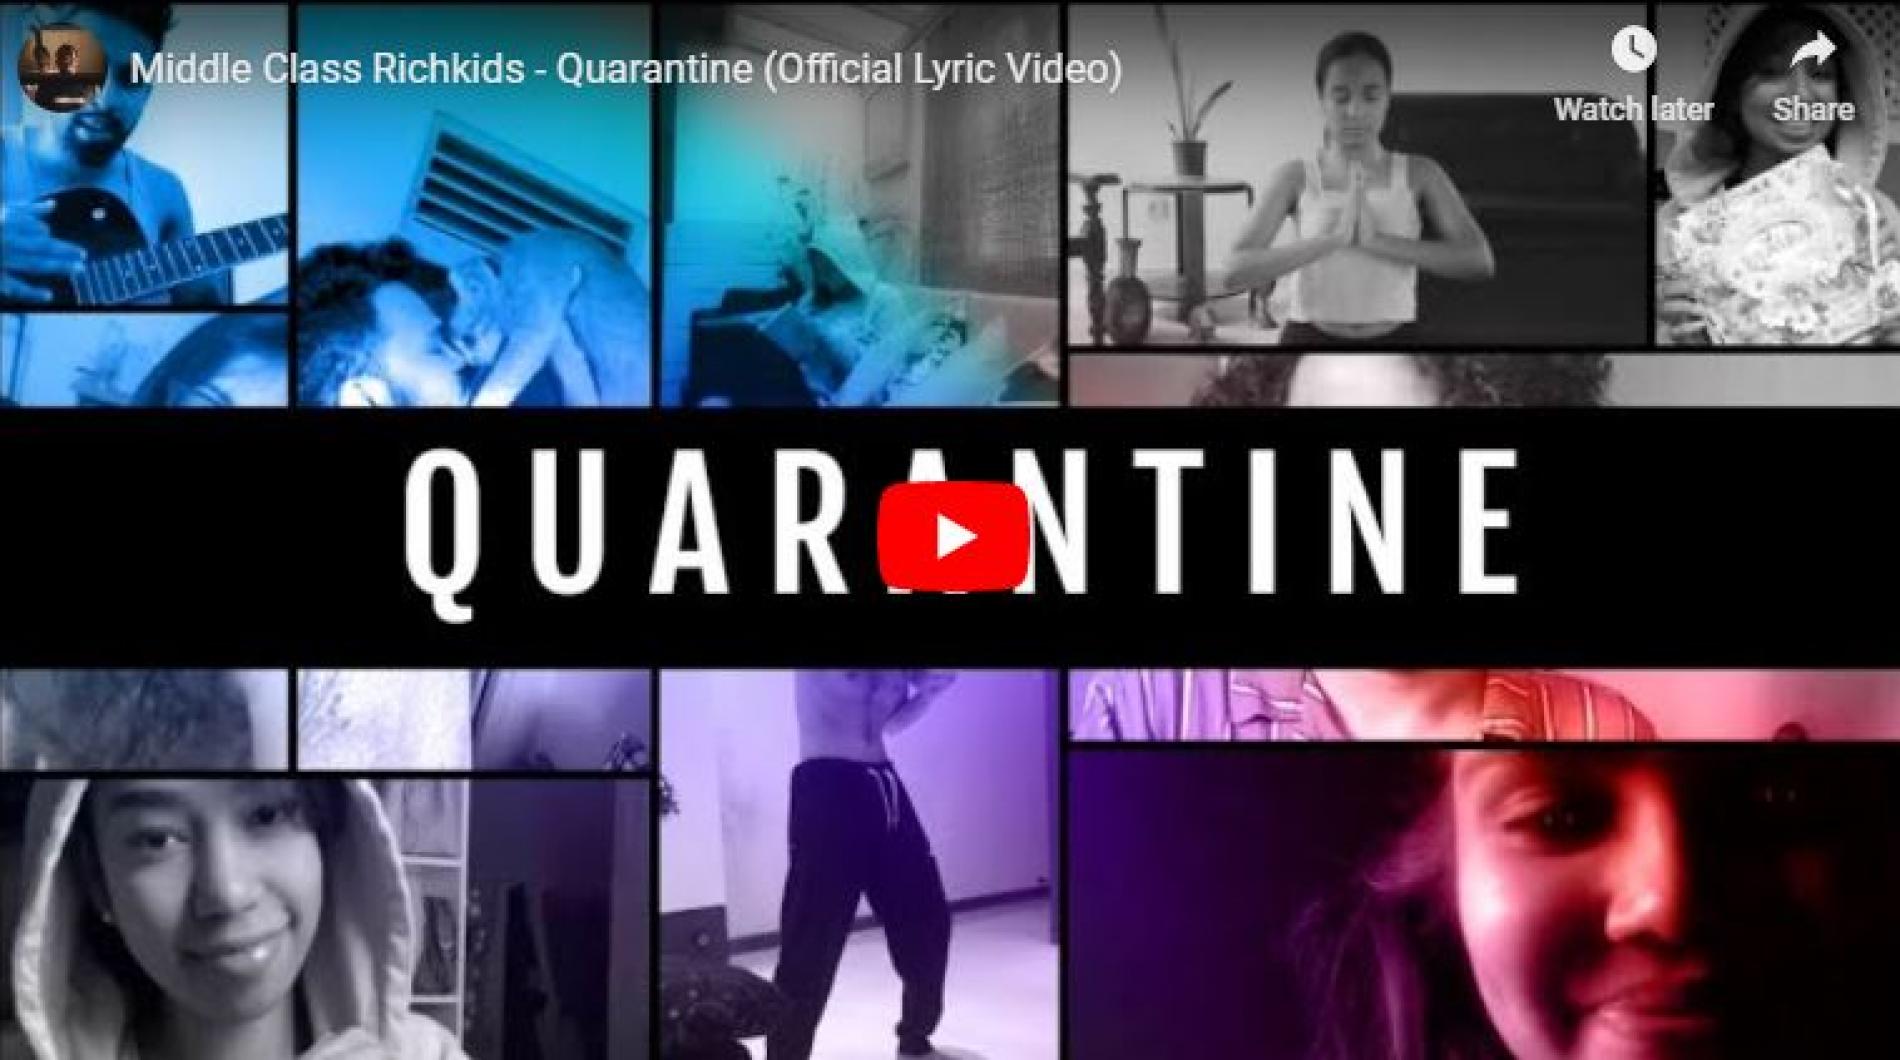 Middle Class Richkids – Quarantine (Official Lyric Video)